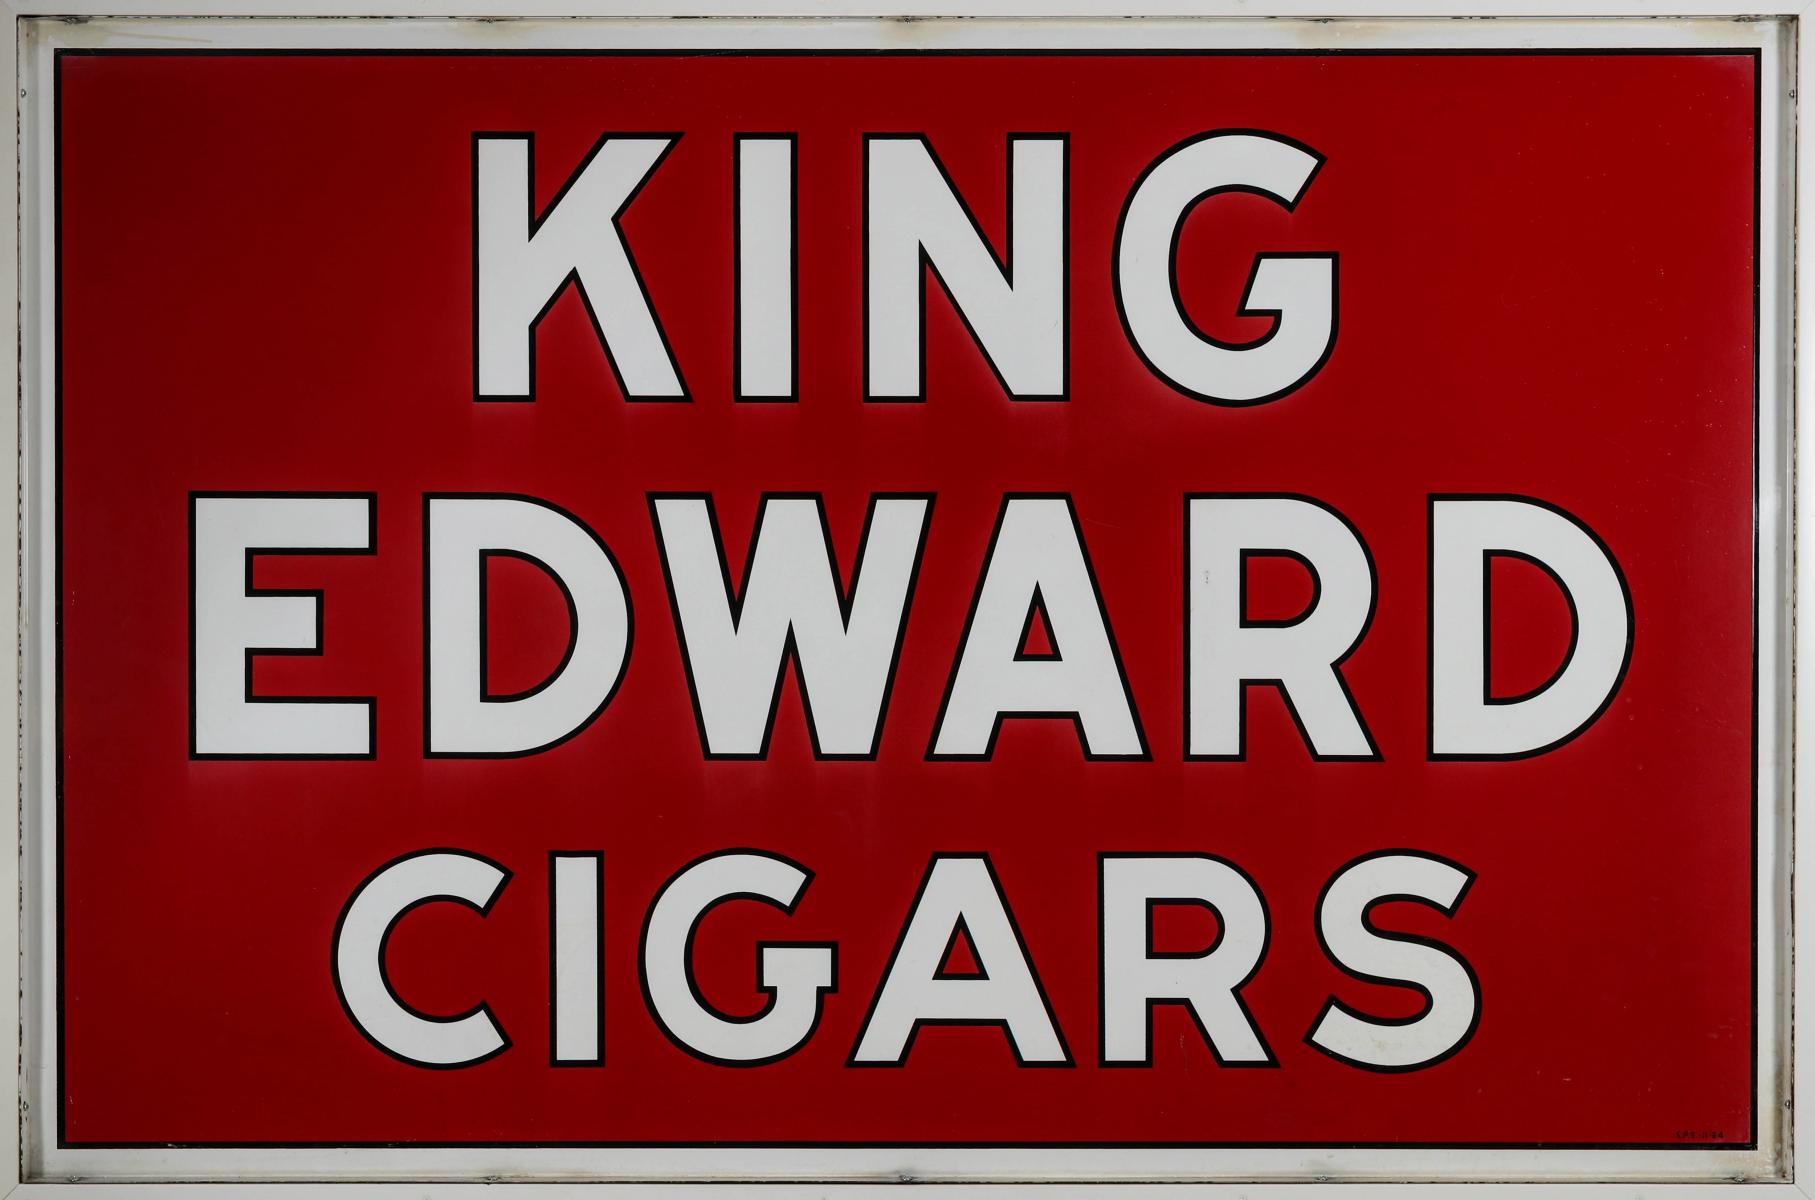 DOUBLE PORCELAIN ENAMEL FOR KING EDWARD CIGARS